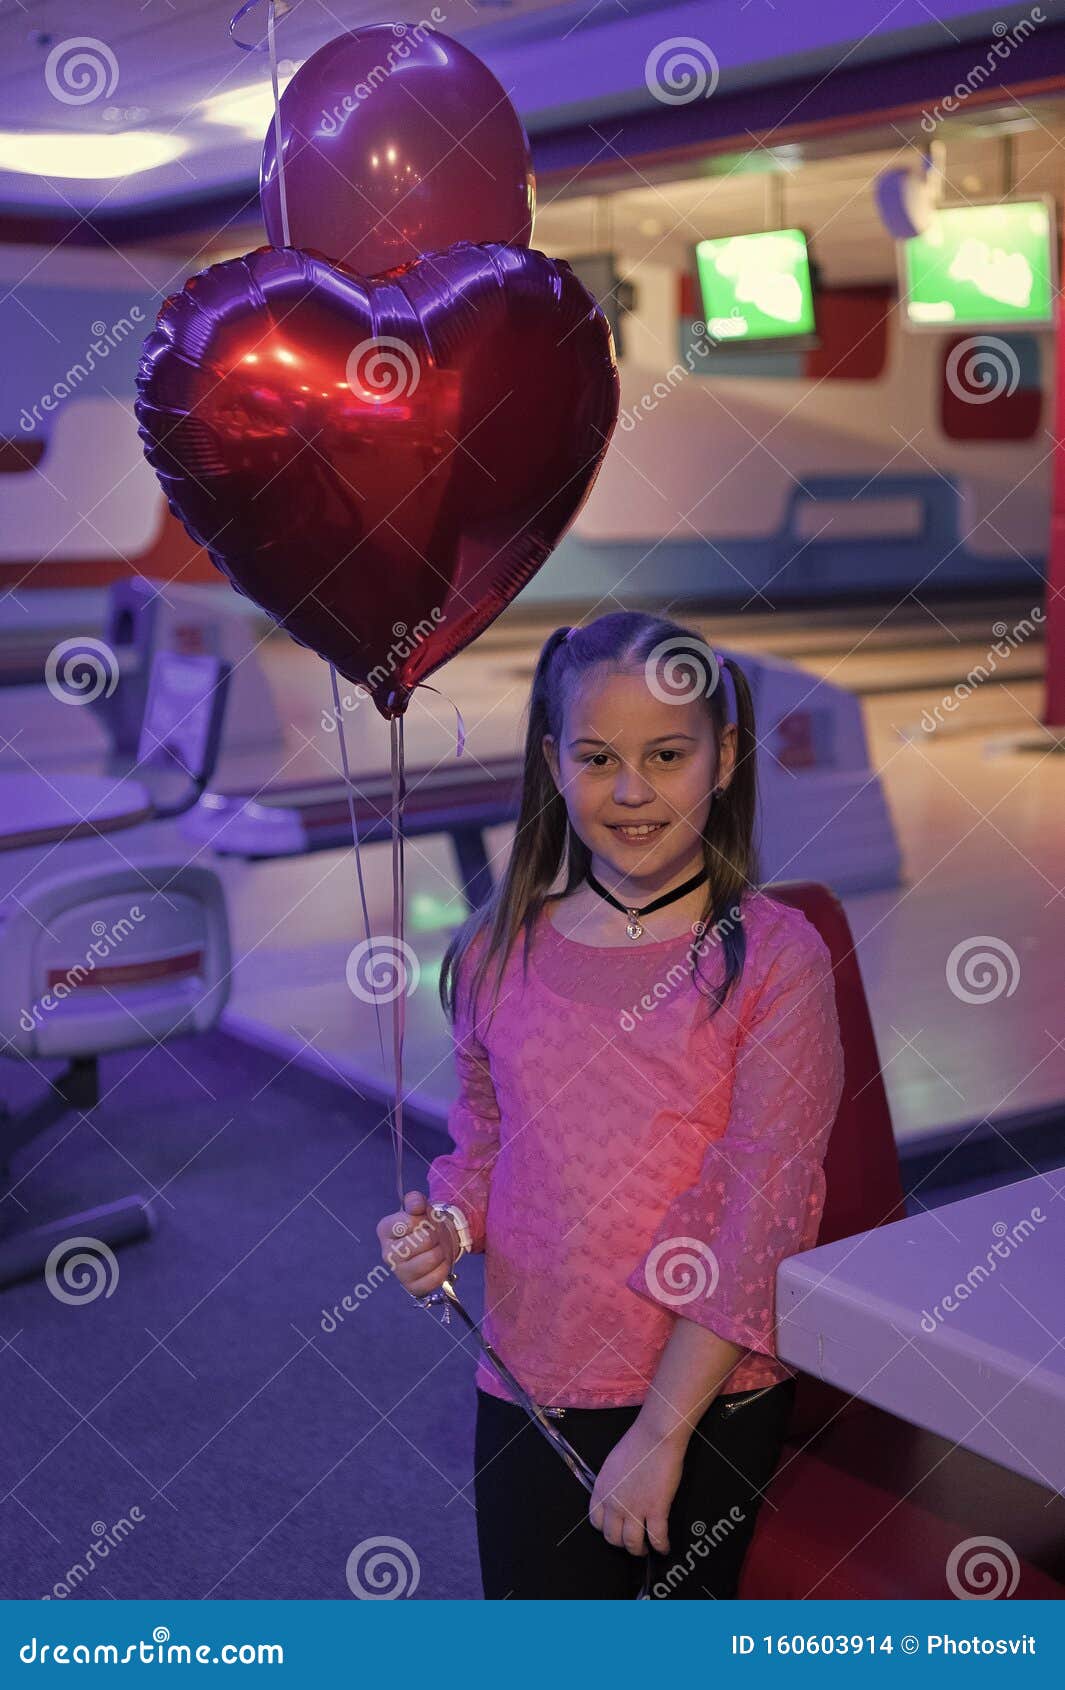 girl balloons celebrate birthday bowling club birthday party bowling ideas how to celebrate birthday girl 160603914